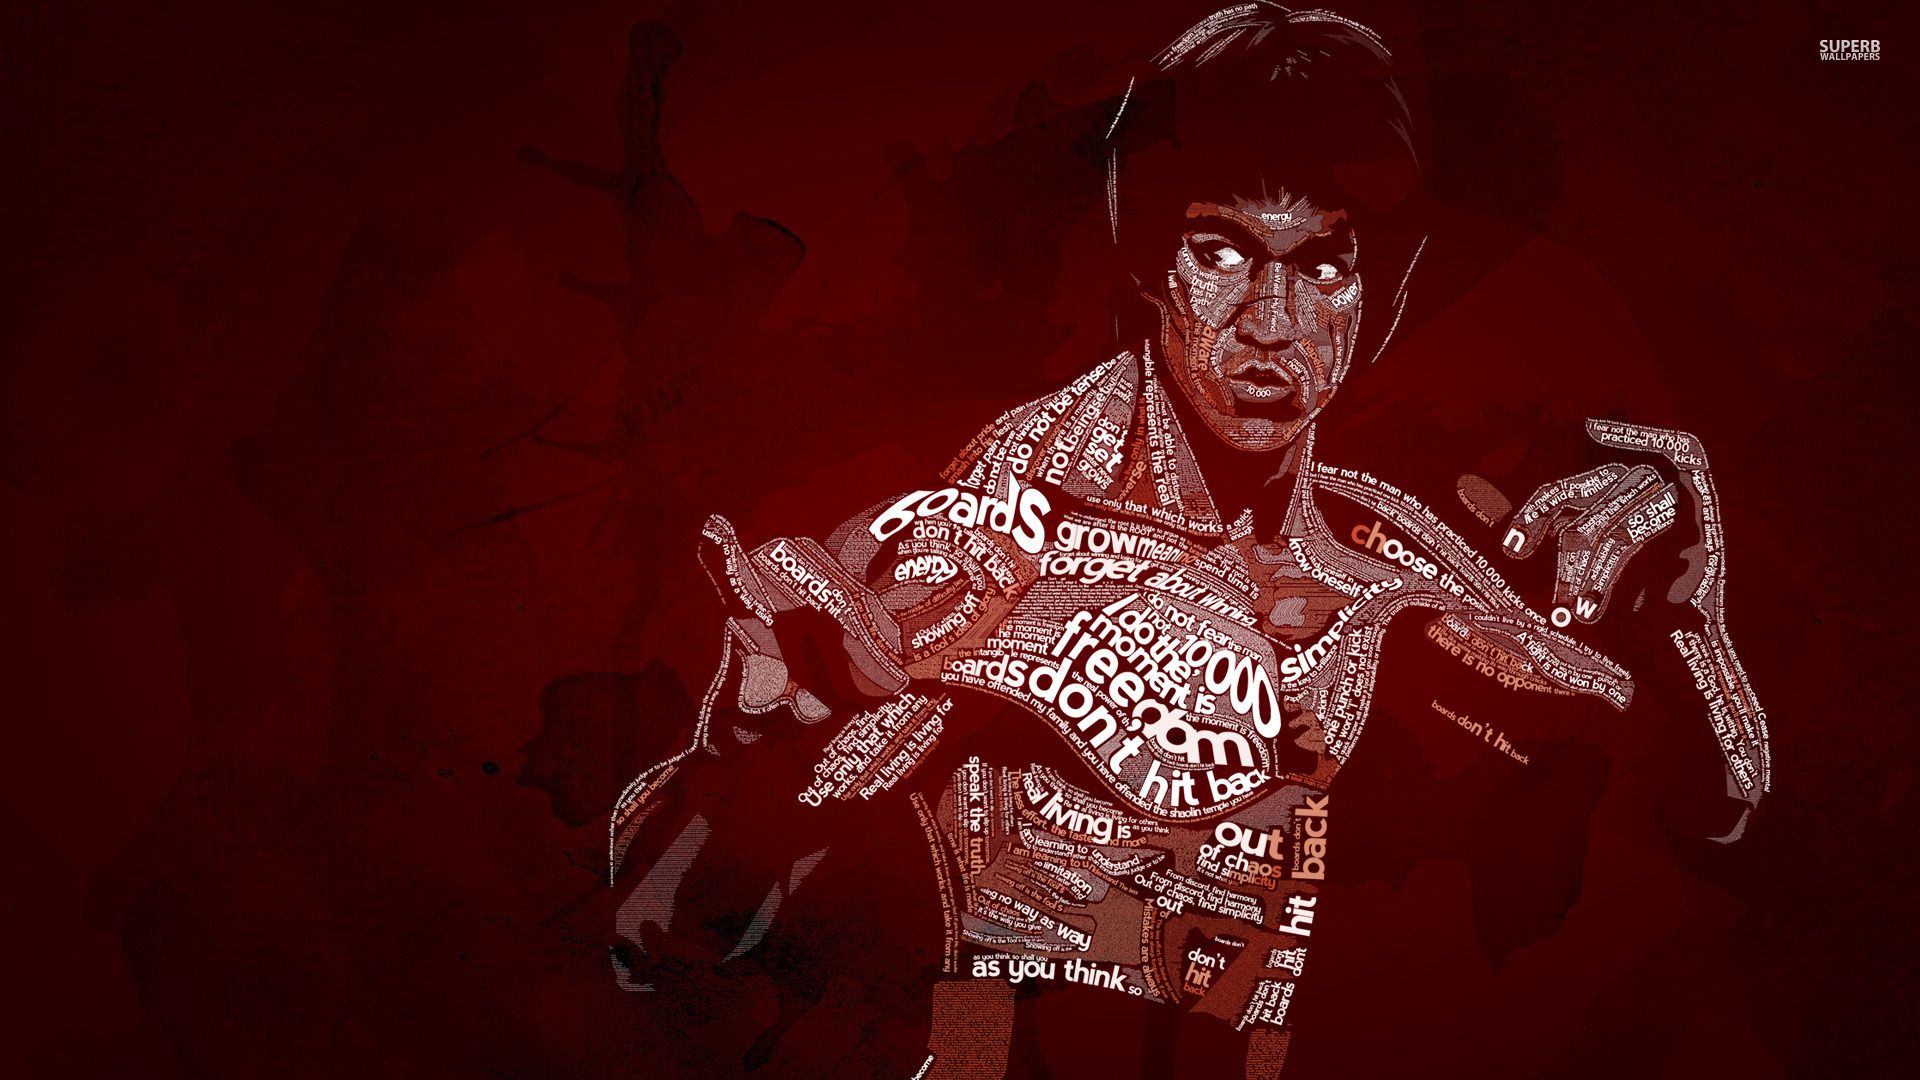 Bruce Lee wallpaper - Typography wallpapers